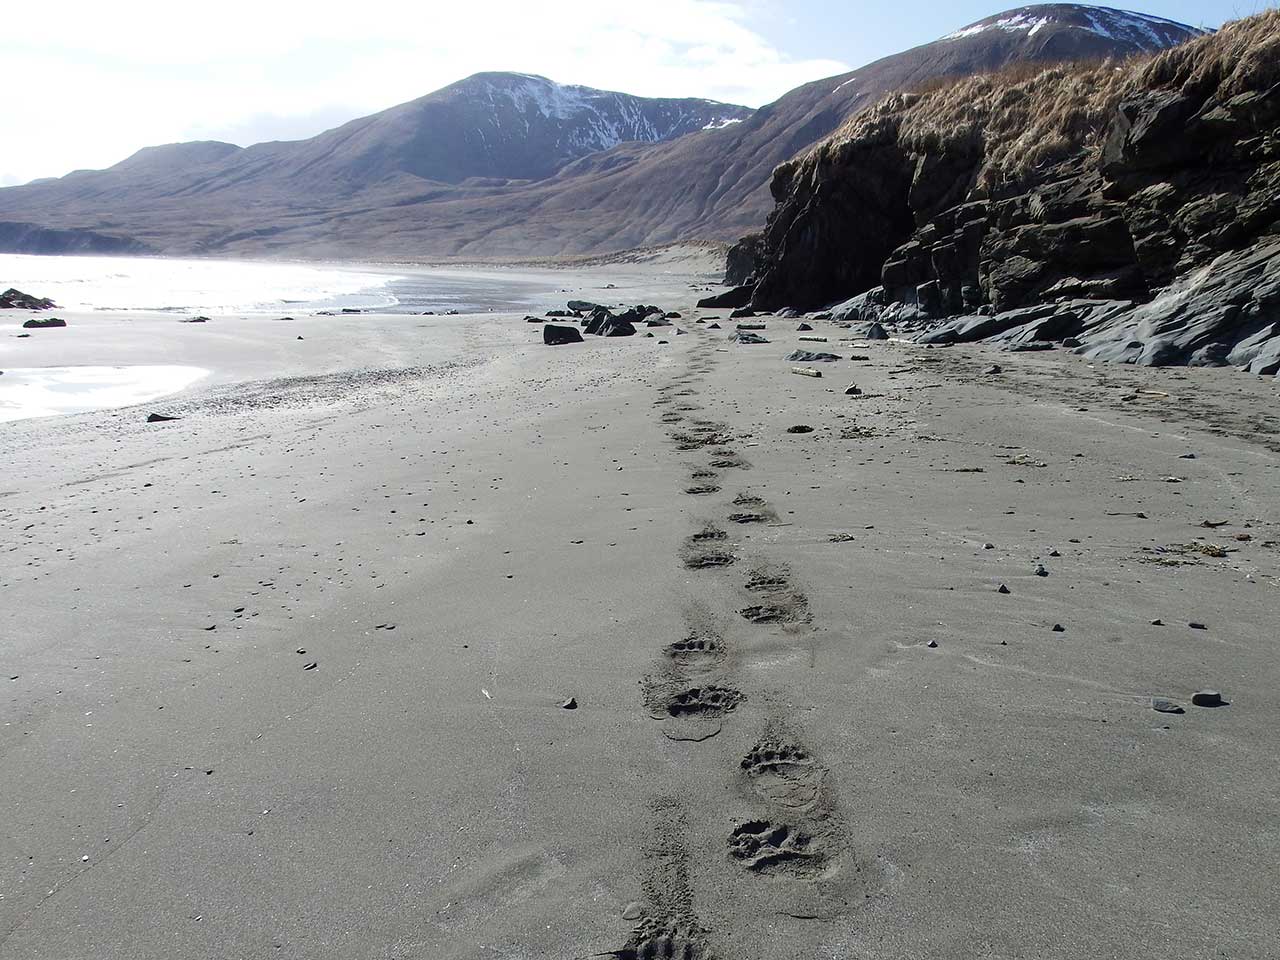 Kodiak Brown Bear Footprints in the Sand